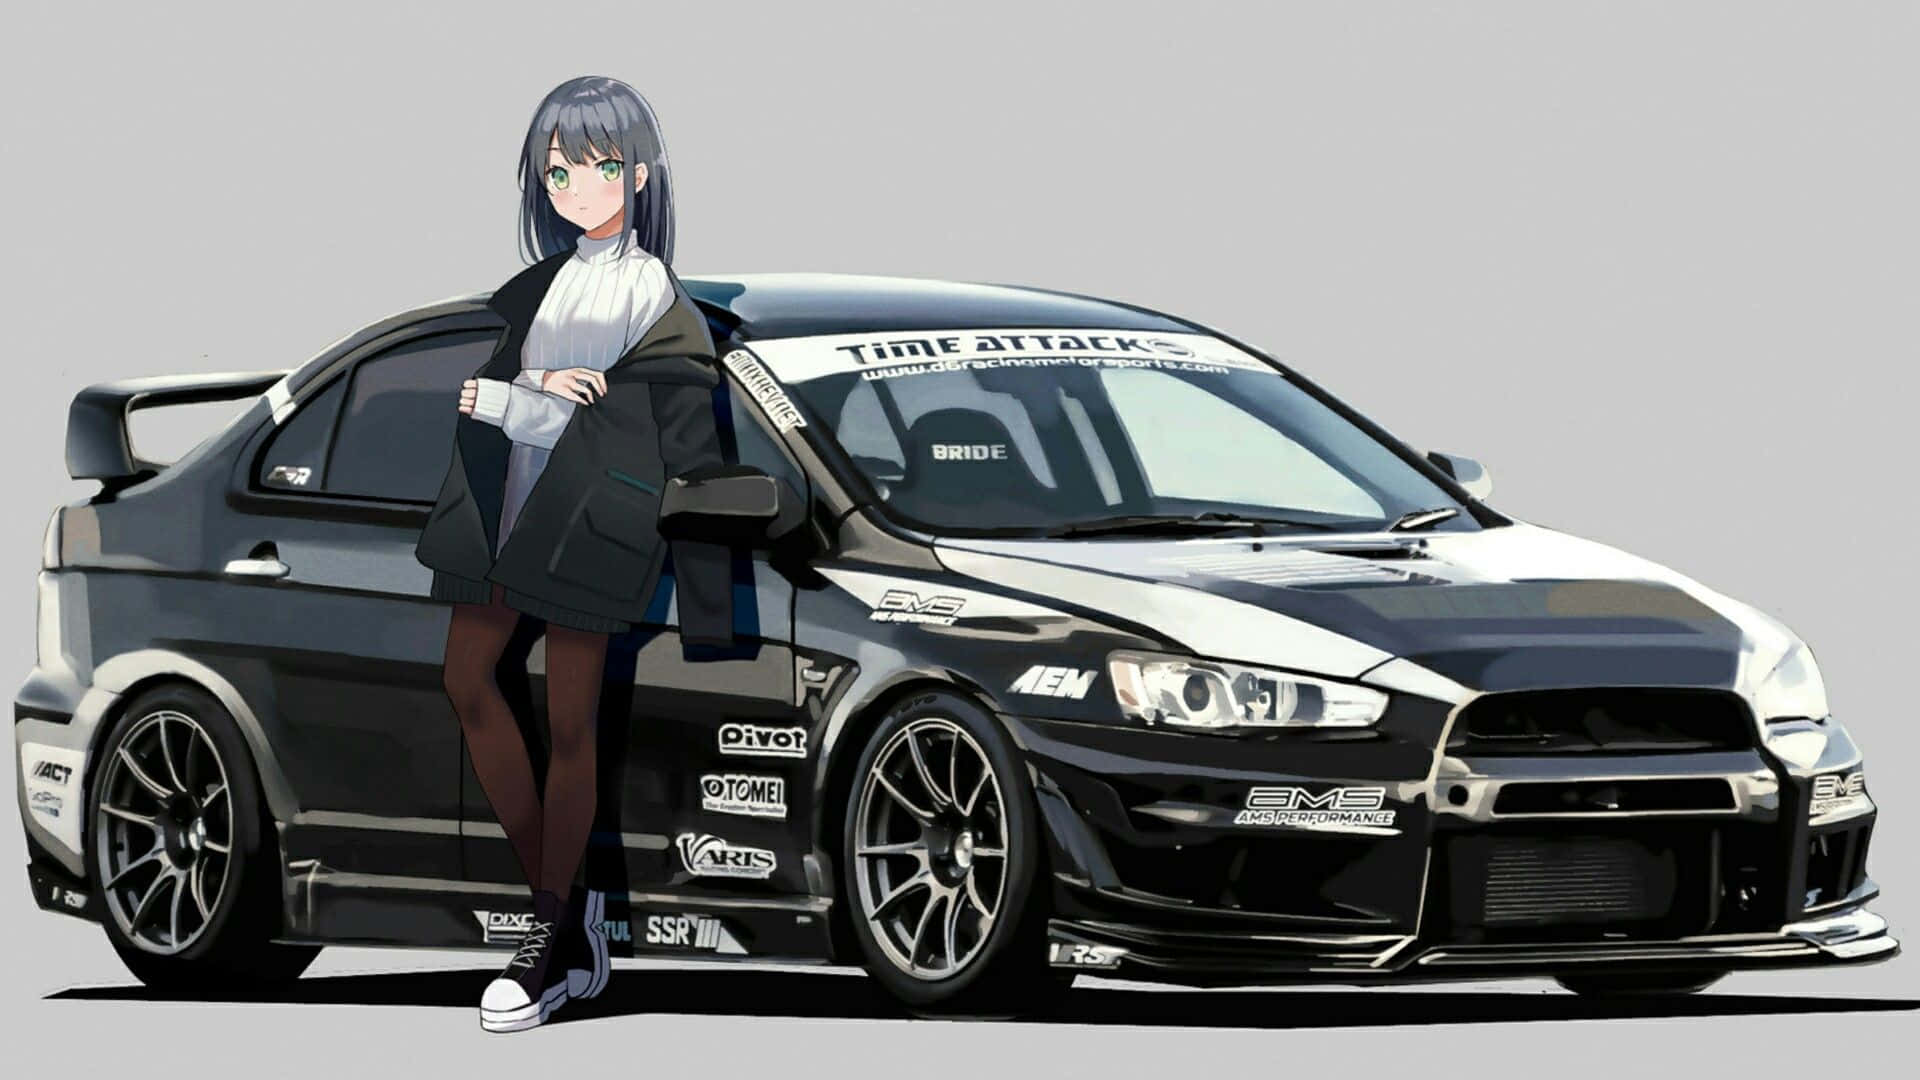 Mitsubishi Lancer Evolution JDM Anime Girl Wallpaper